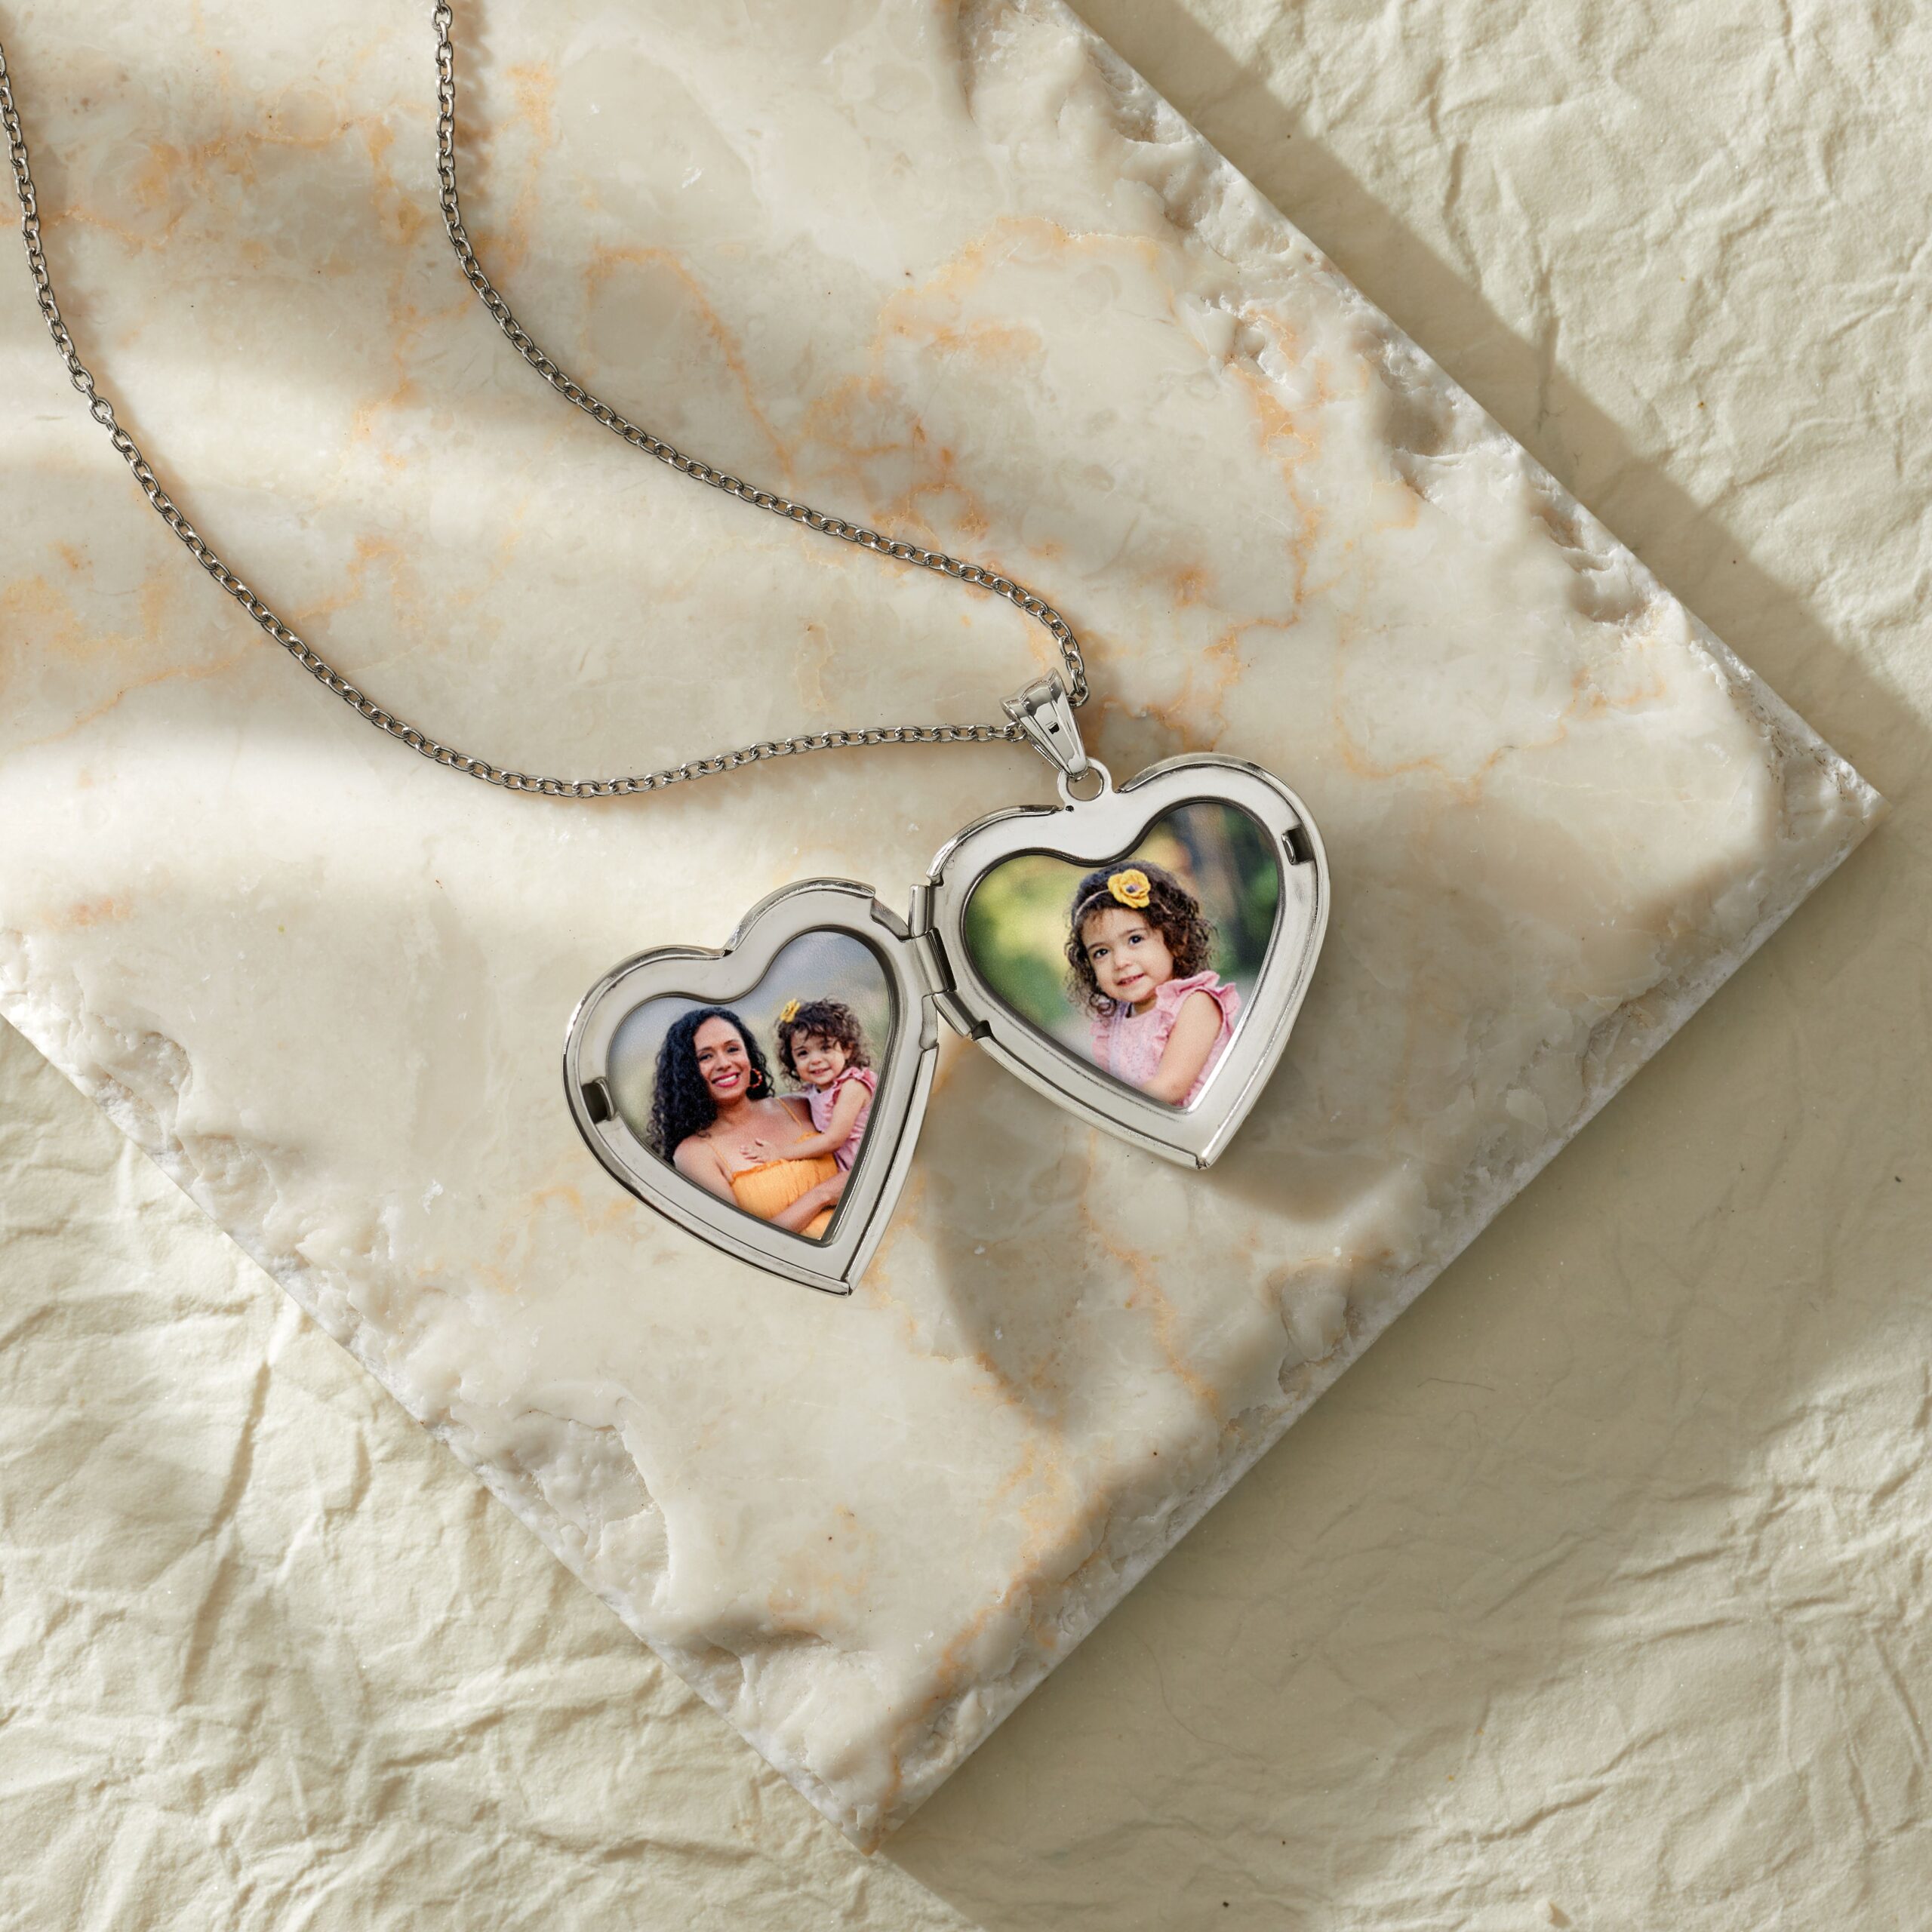 custom locket necklace with photos inside